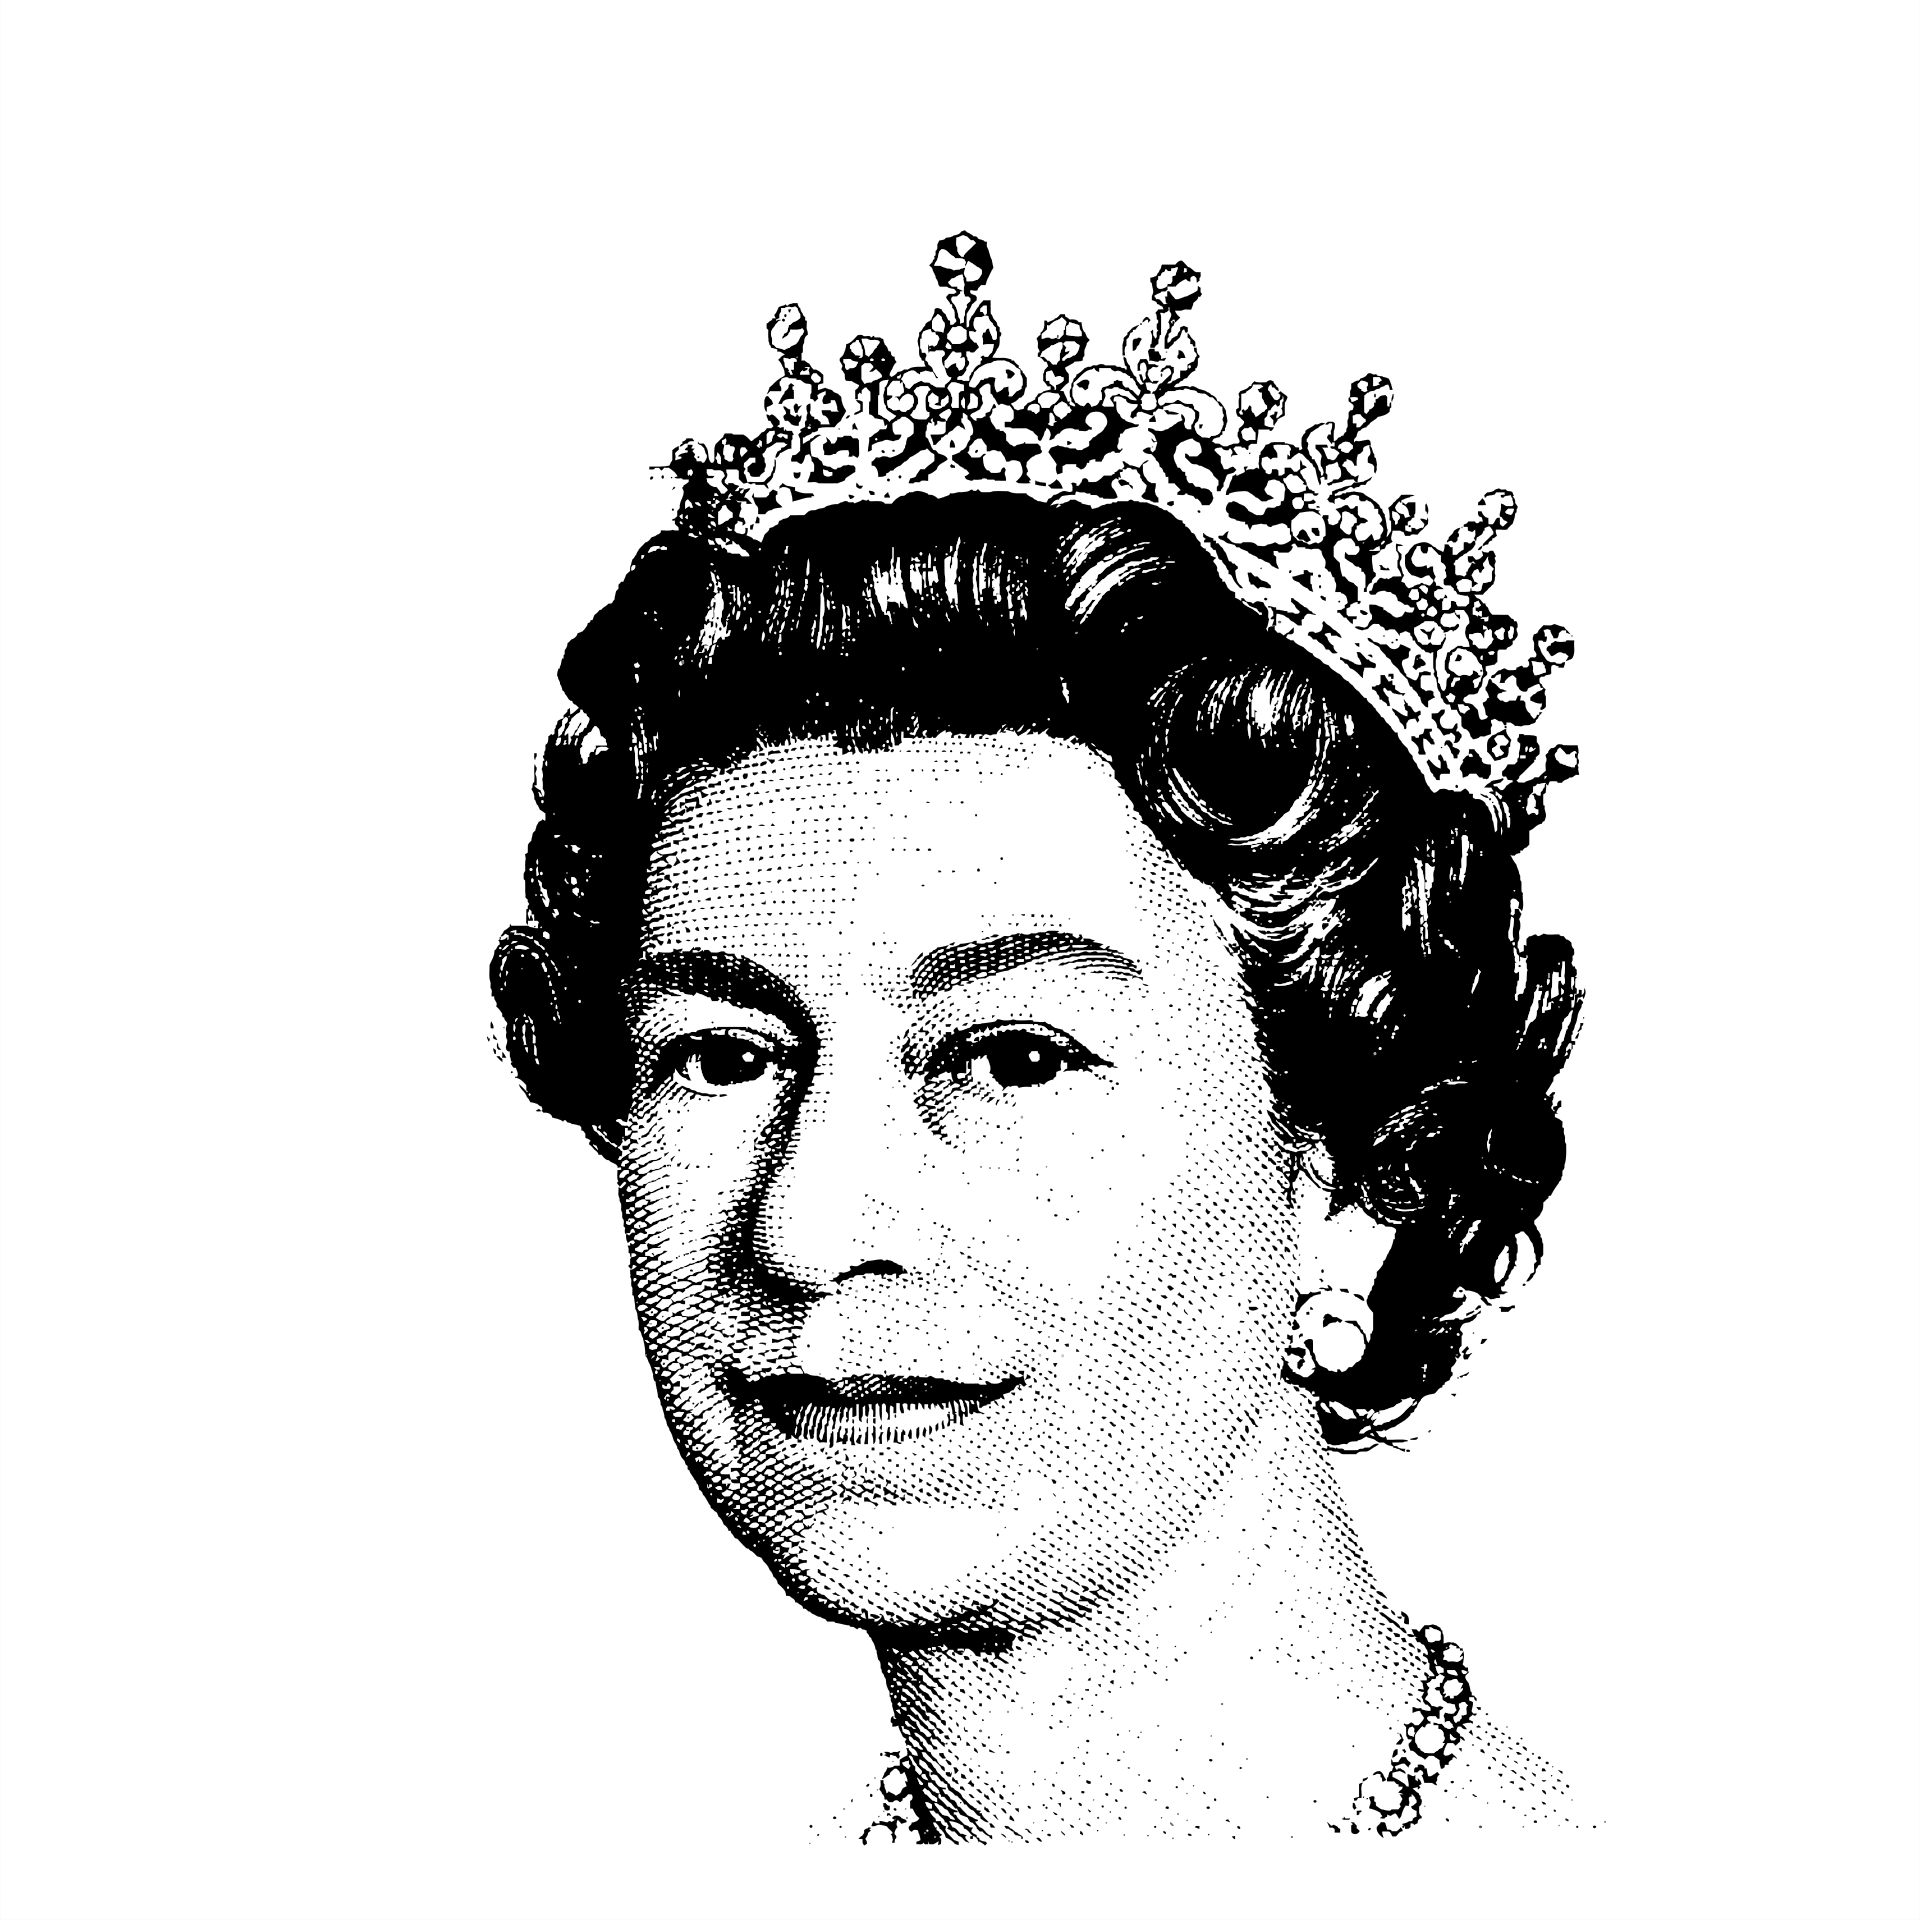 The Ultimate Female Leader: Her Majesty Queen Elizabeth II